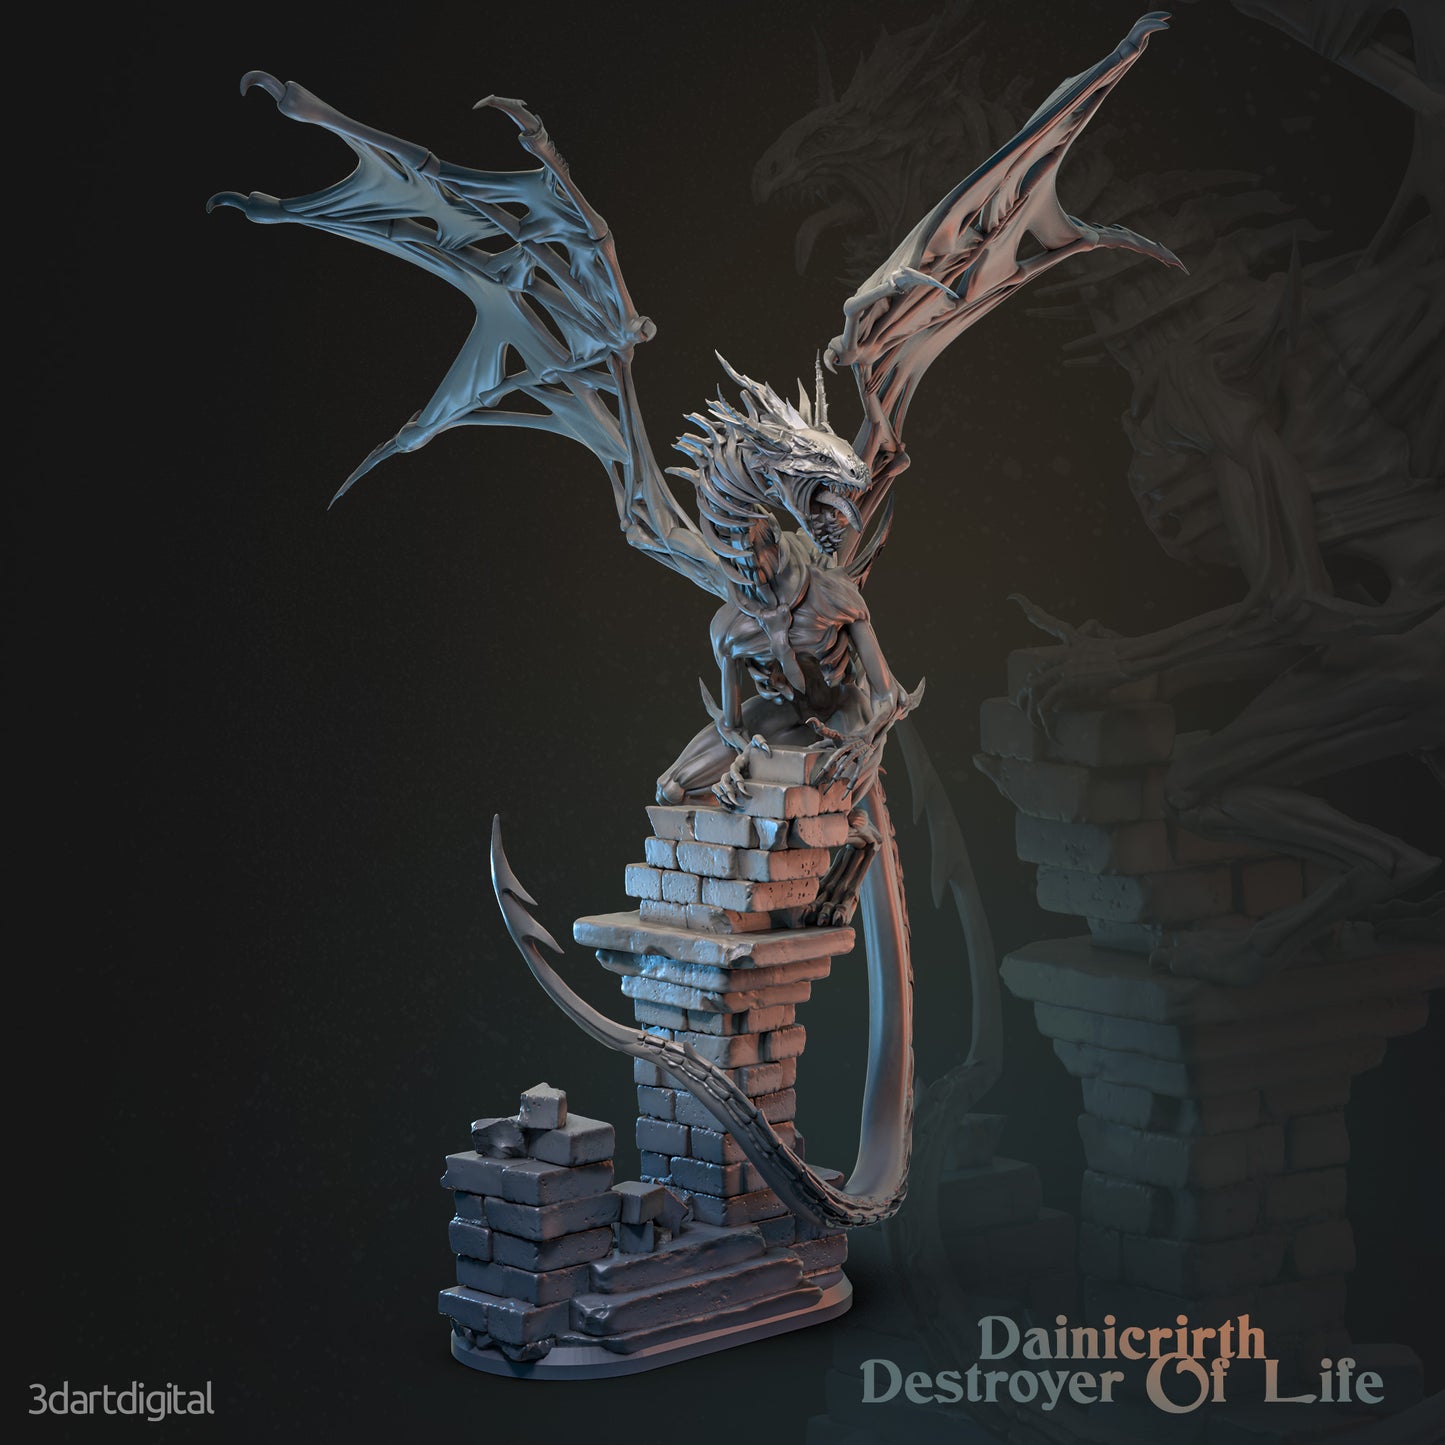 Dainivrirh, Destroyer of Life